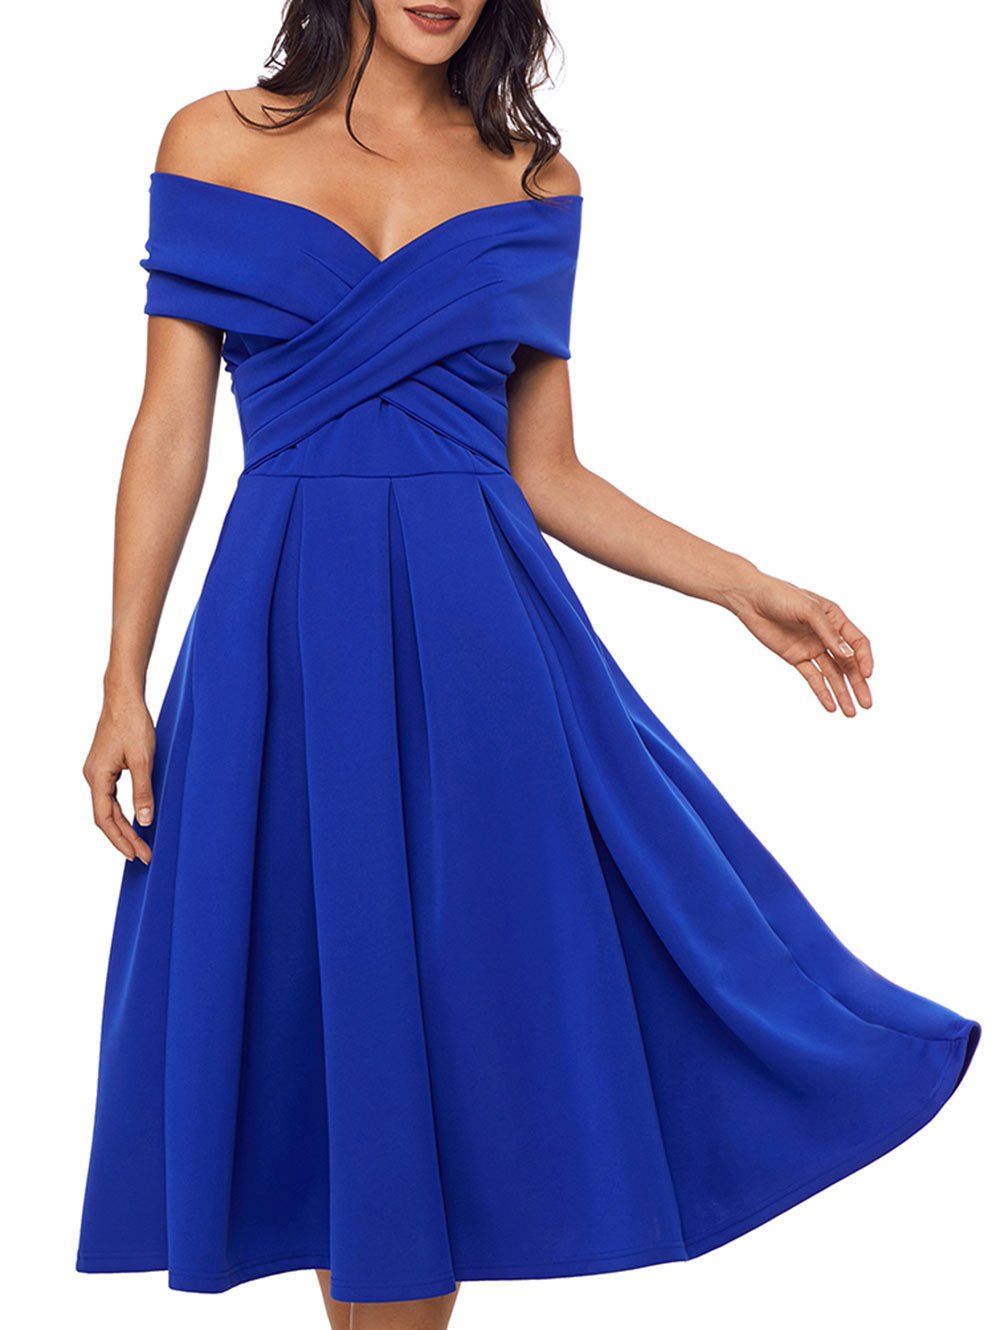 [58% OFF] Cross Front Open Shoulder Prom Dress | Rosegal